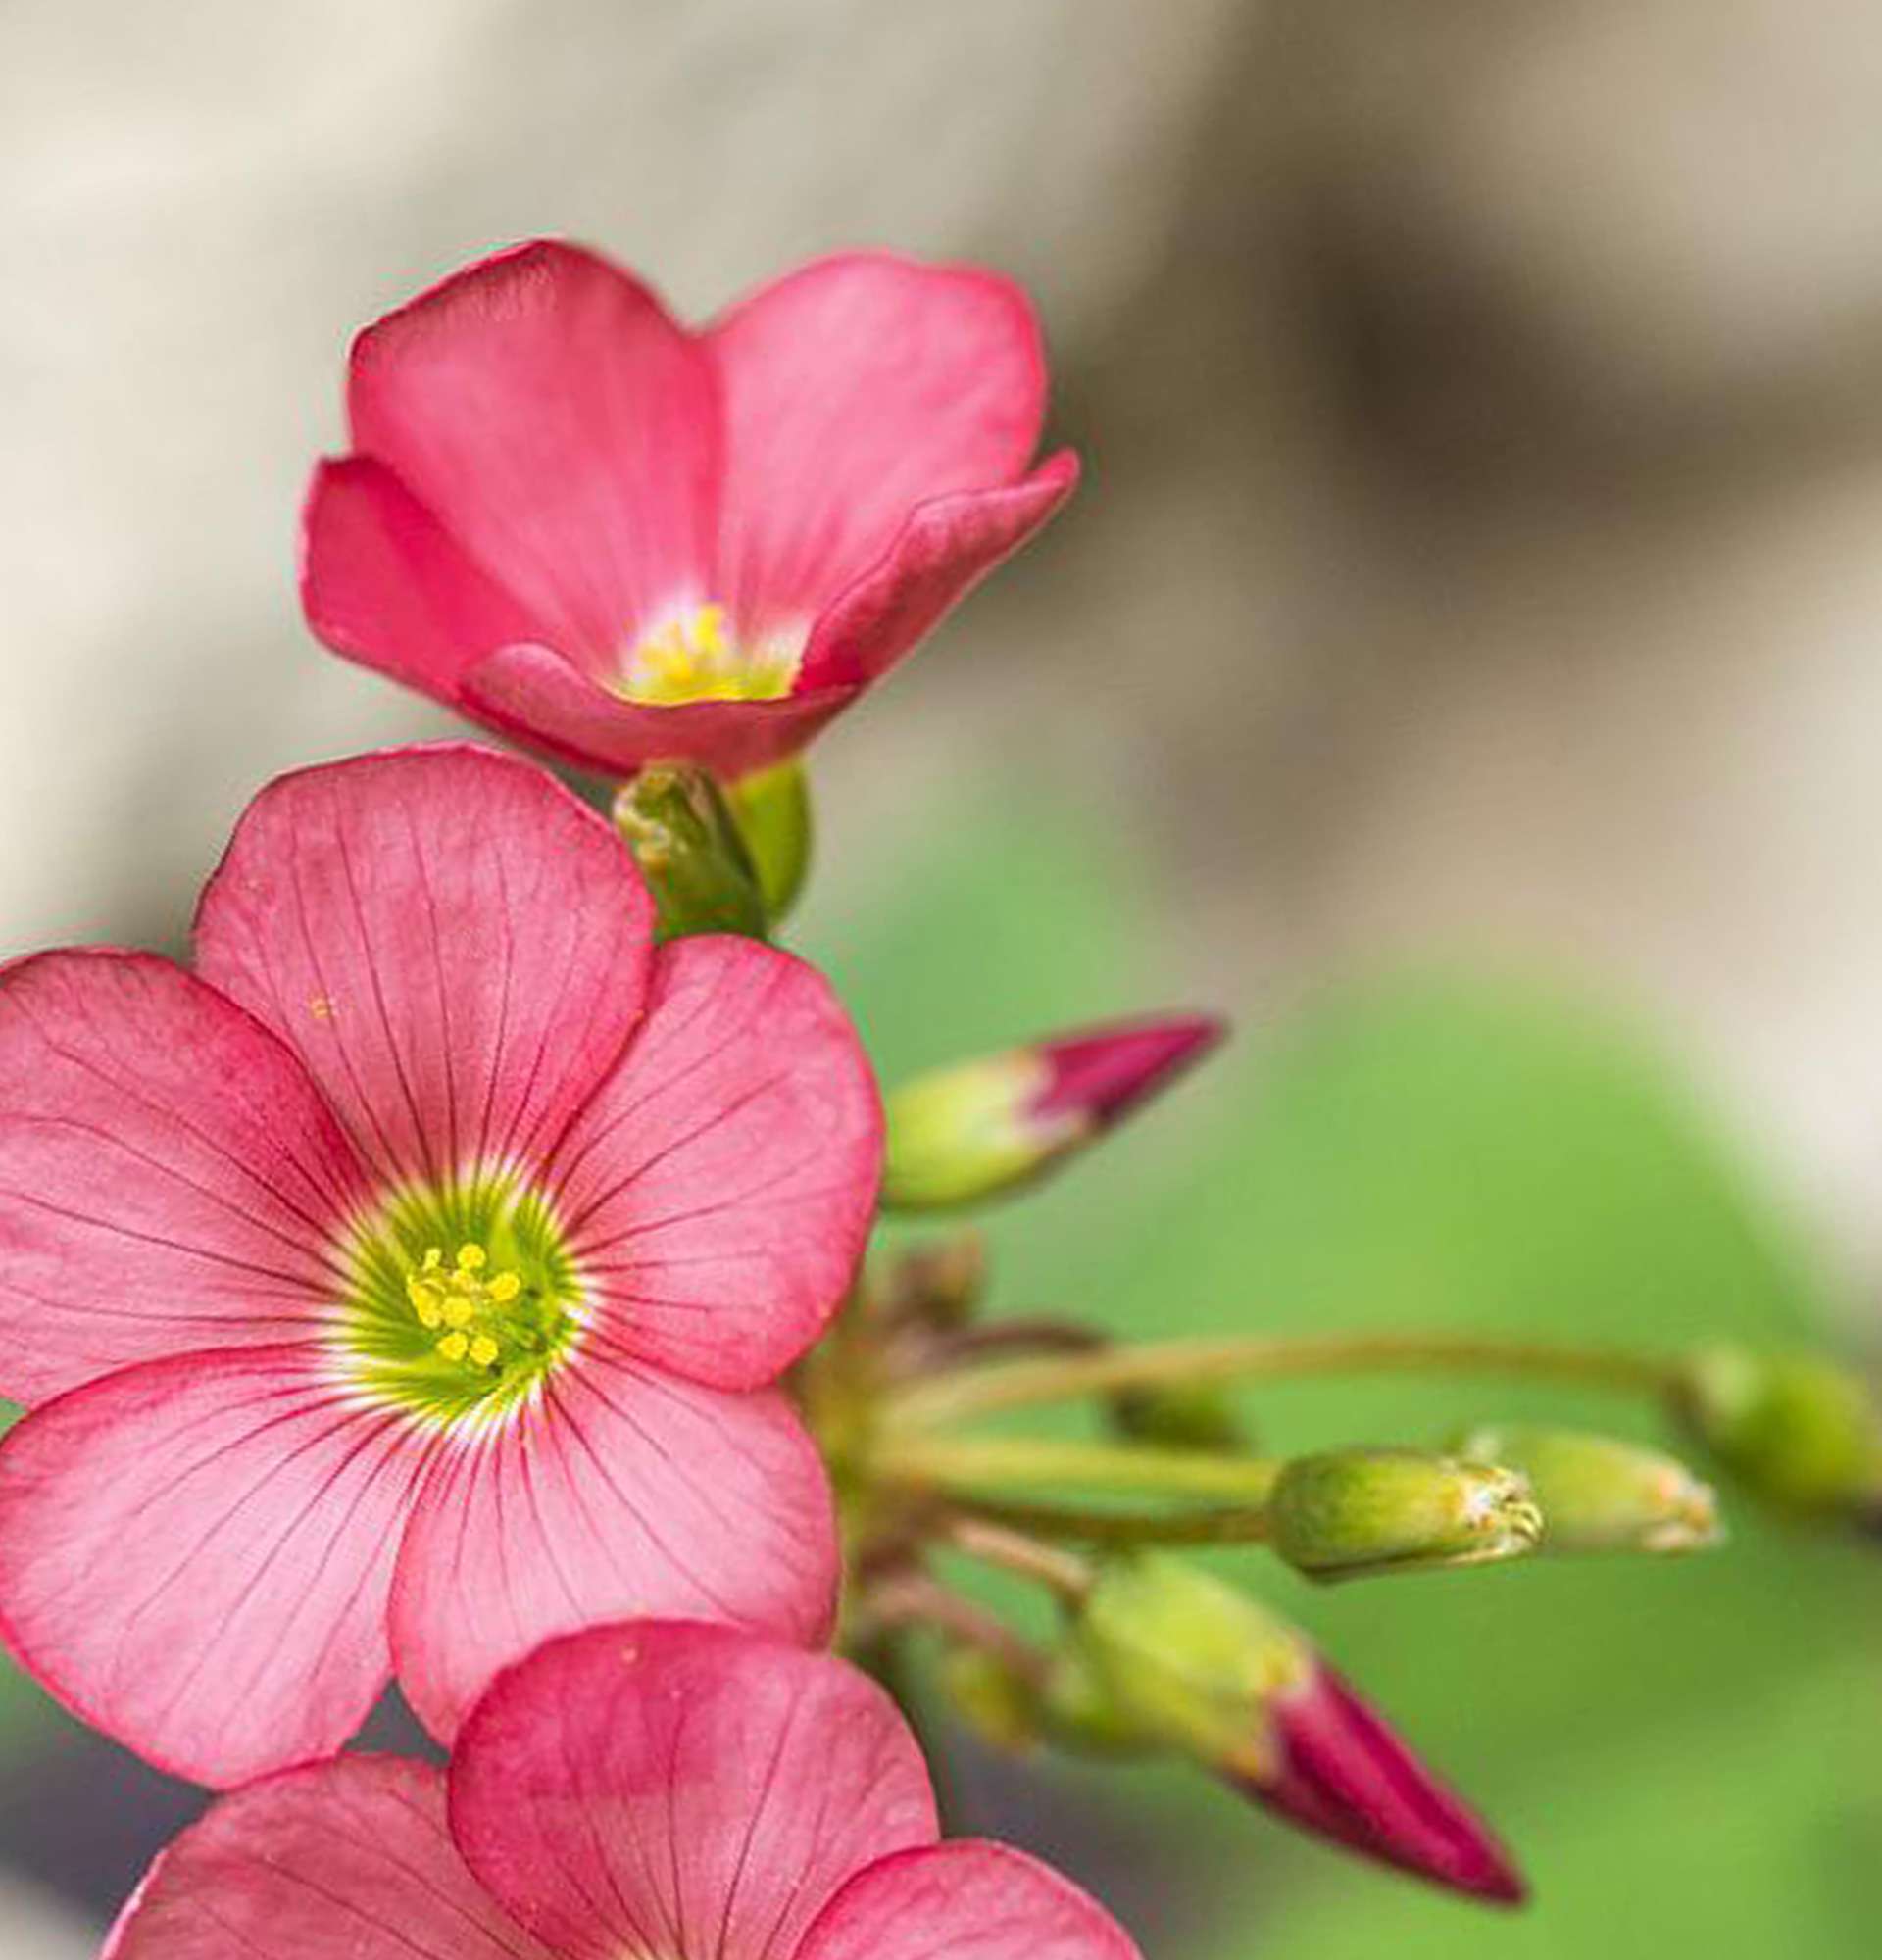  цветок день и ночь фото – вазон кислица